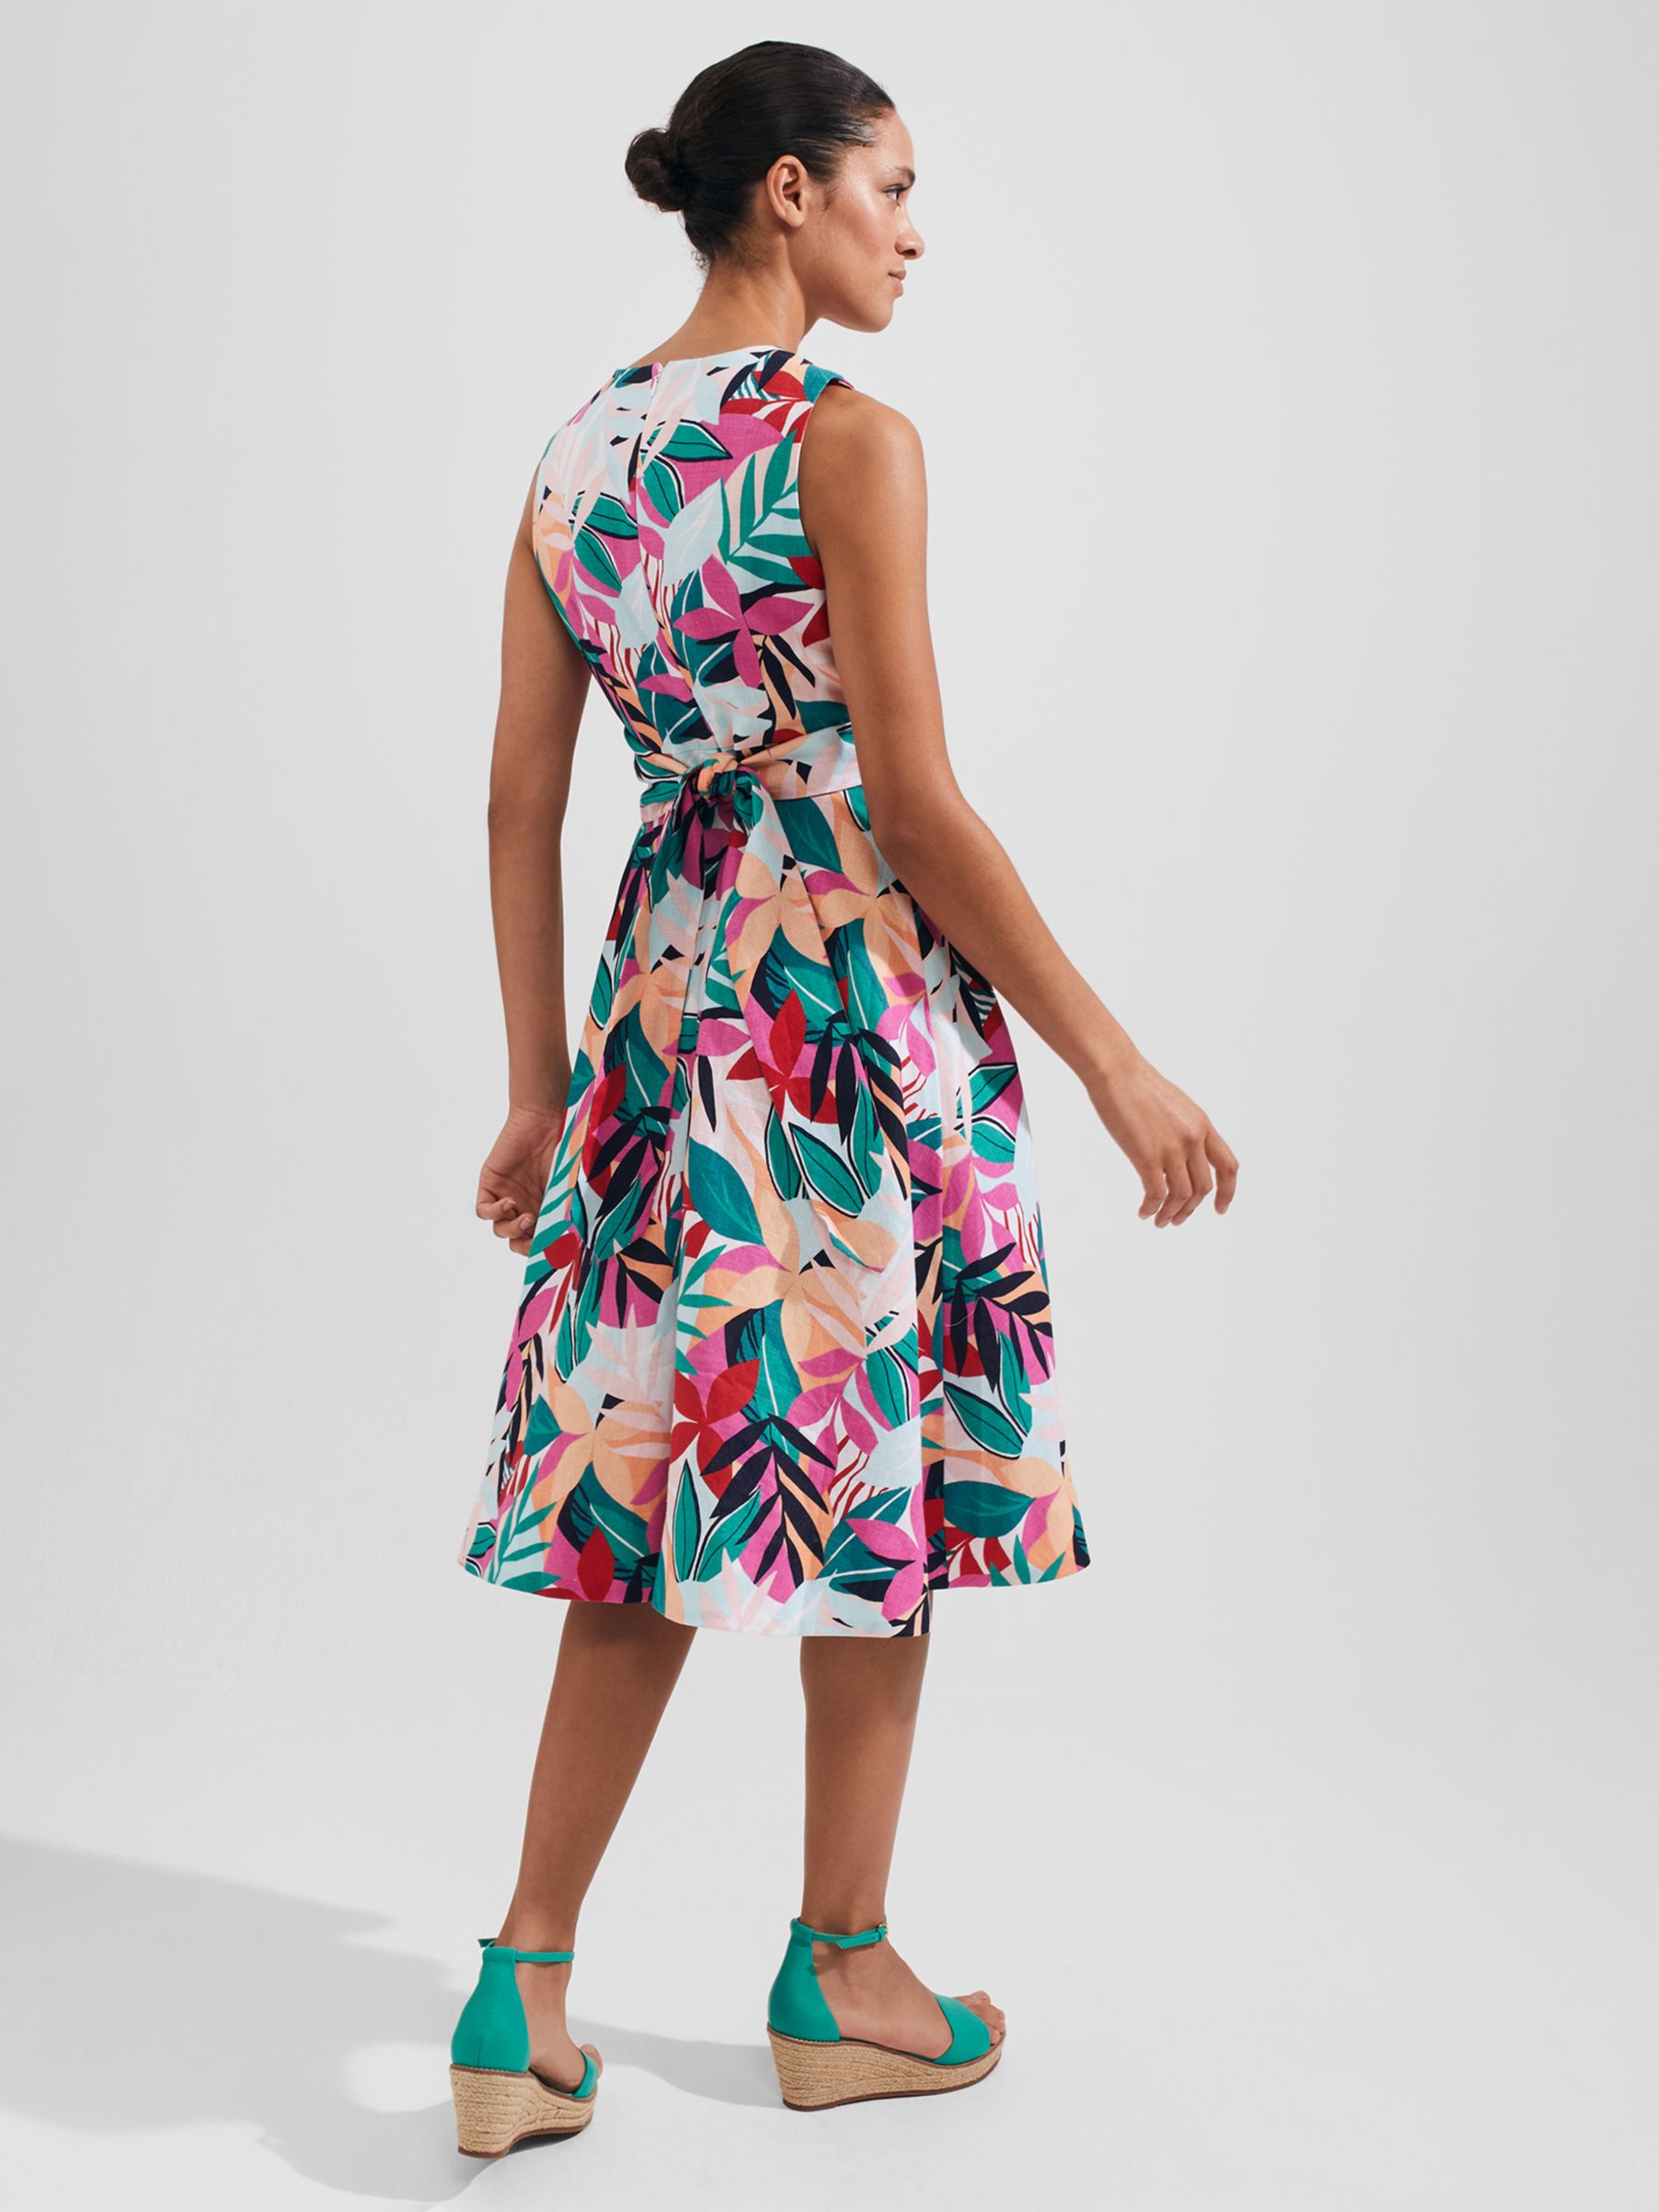 Hobbs Petite Mariella Leaf Print Linen Dress, Multi, 6